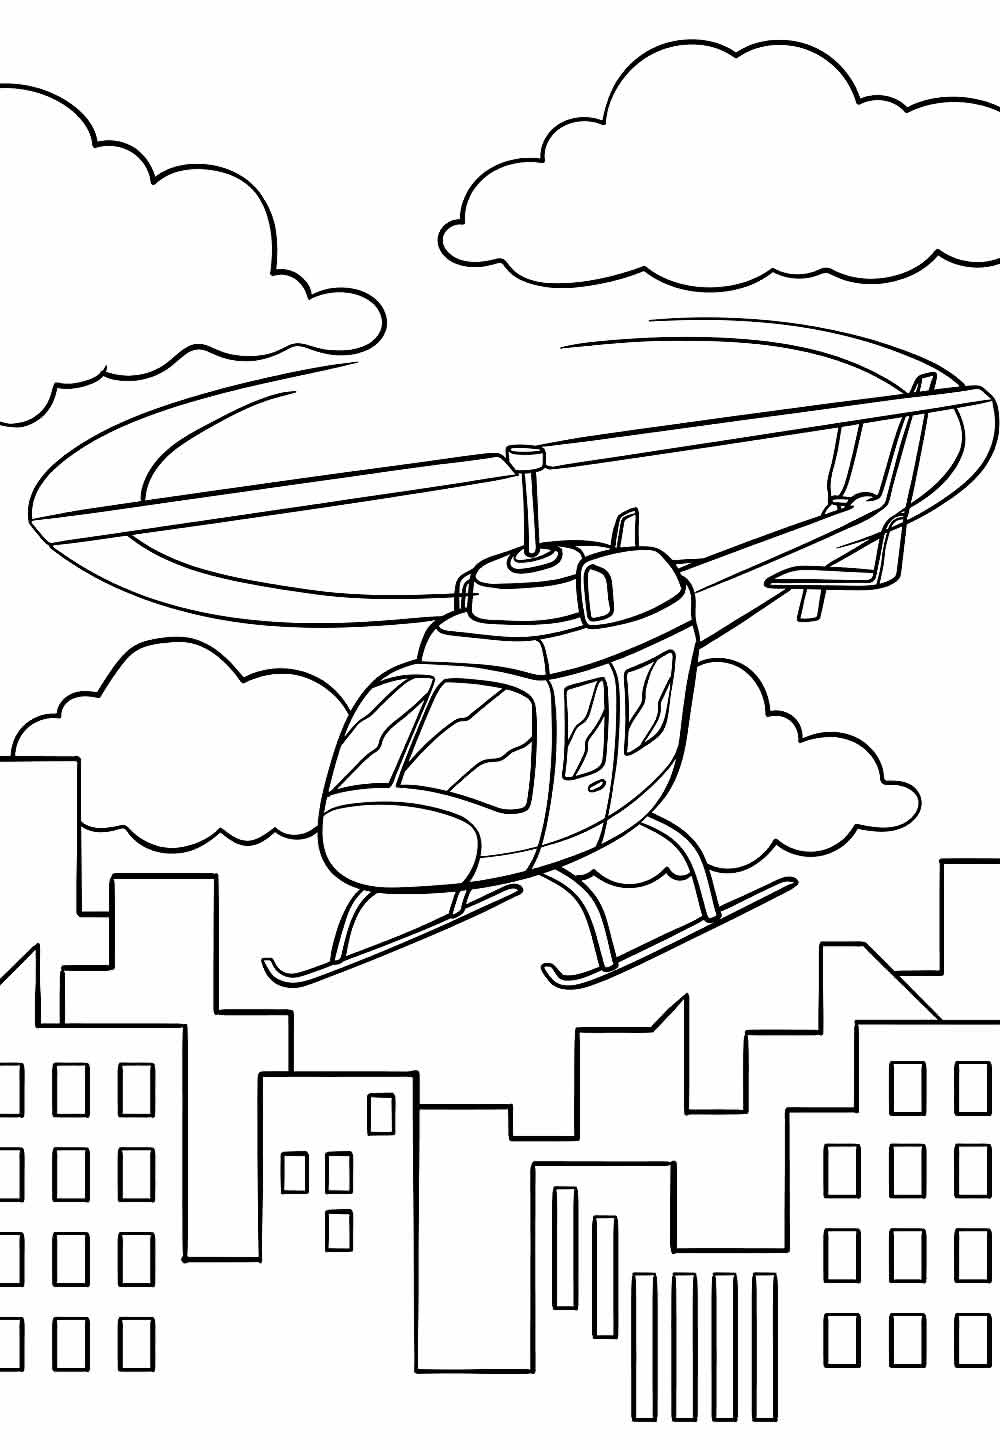 Desenho de Helicóptero para colorir